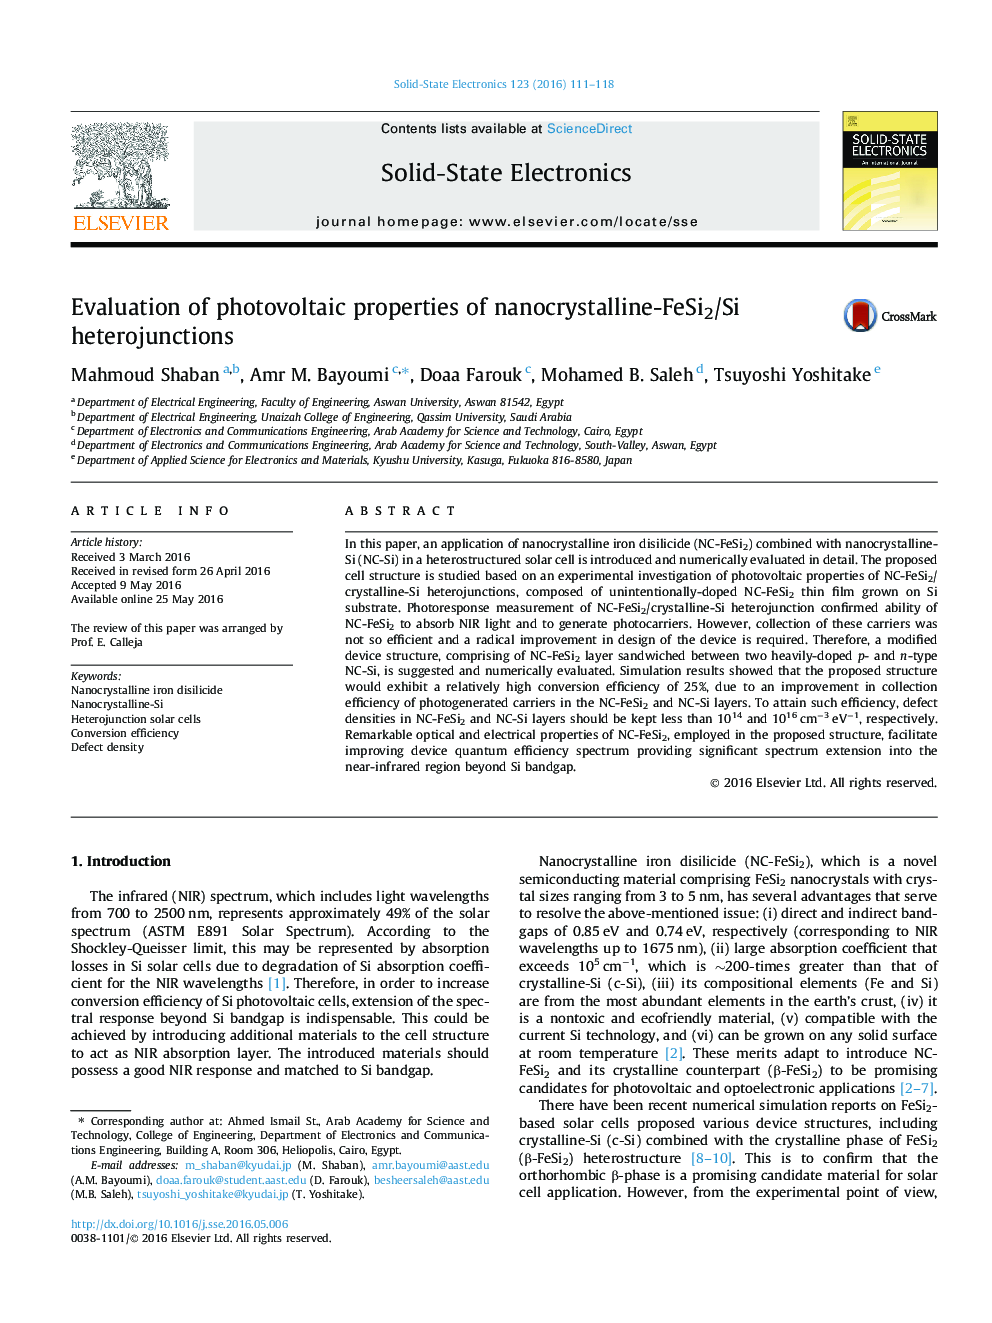 Evaluation of photovoltaic properties of nanocrystalline-FeSi2/Si heterojunctions